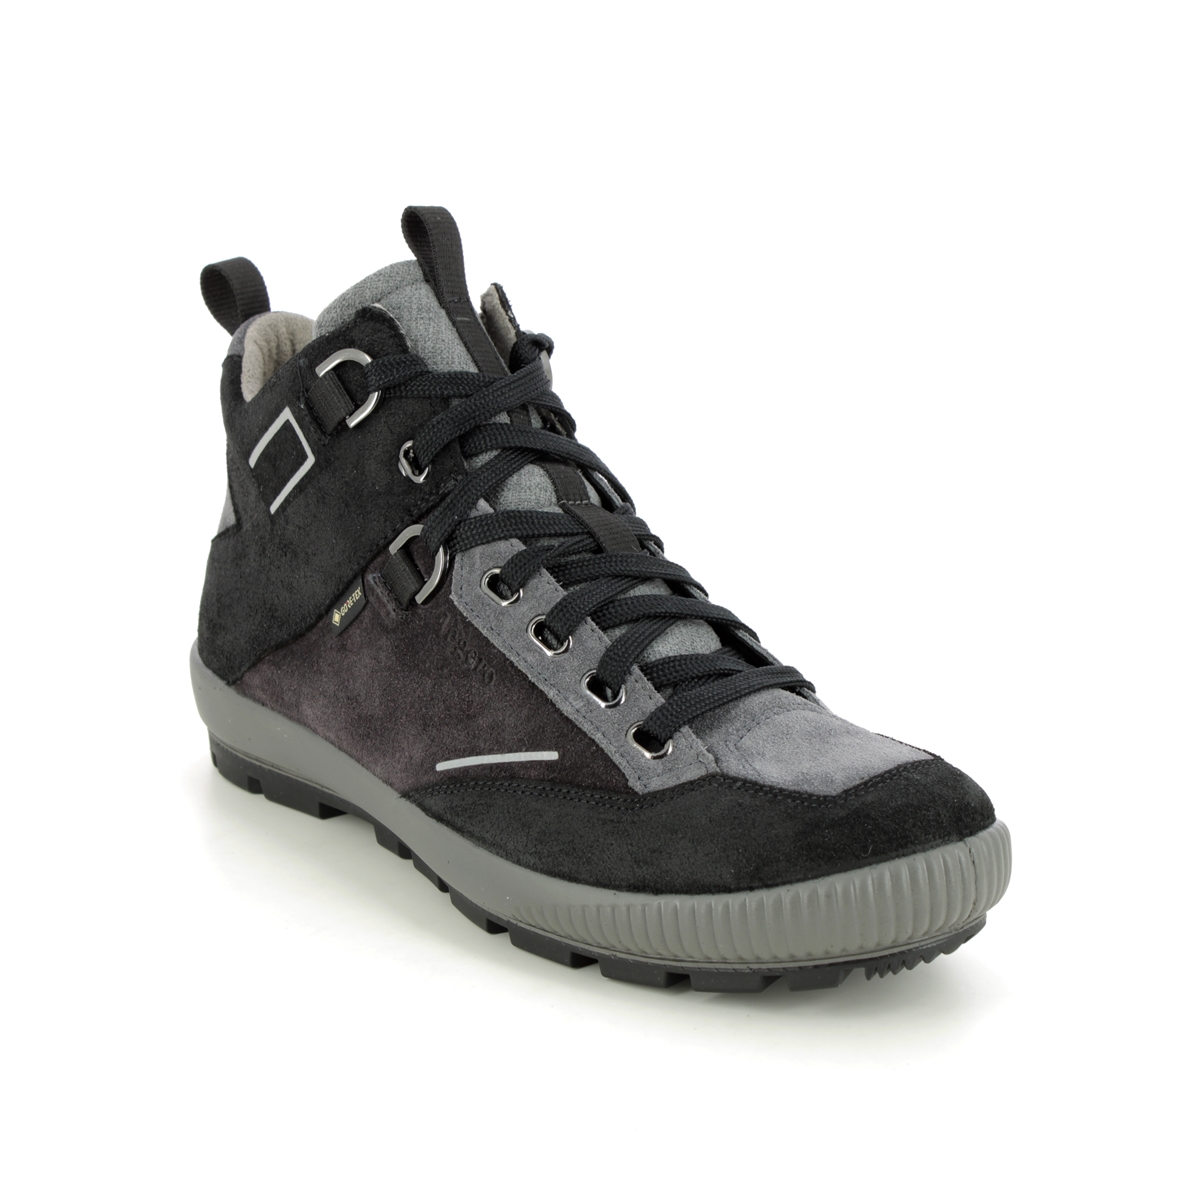 Legero Tanaro Gtx Trek Black Grey Womens Walking Boots 2000125-0000 In Size 5 In Plain Black Grey